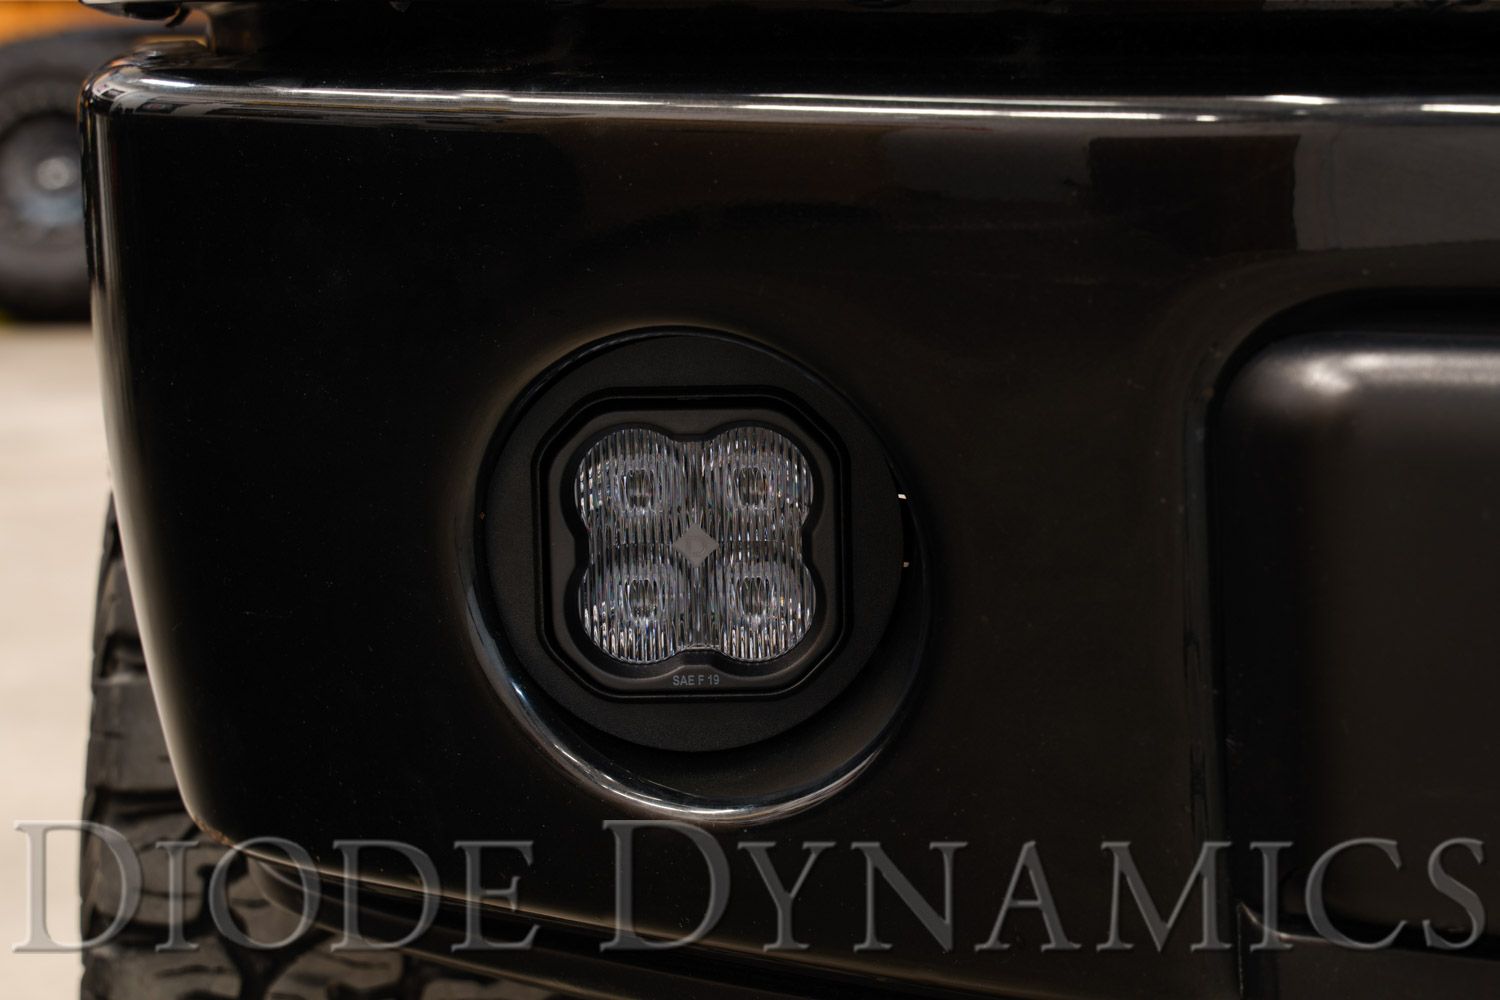 Diode Dynamics SS3 LED Fog Light Kit for Many Vehicles. See Description